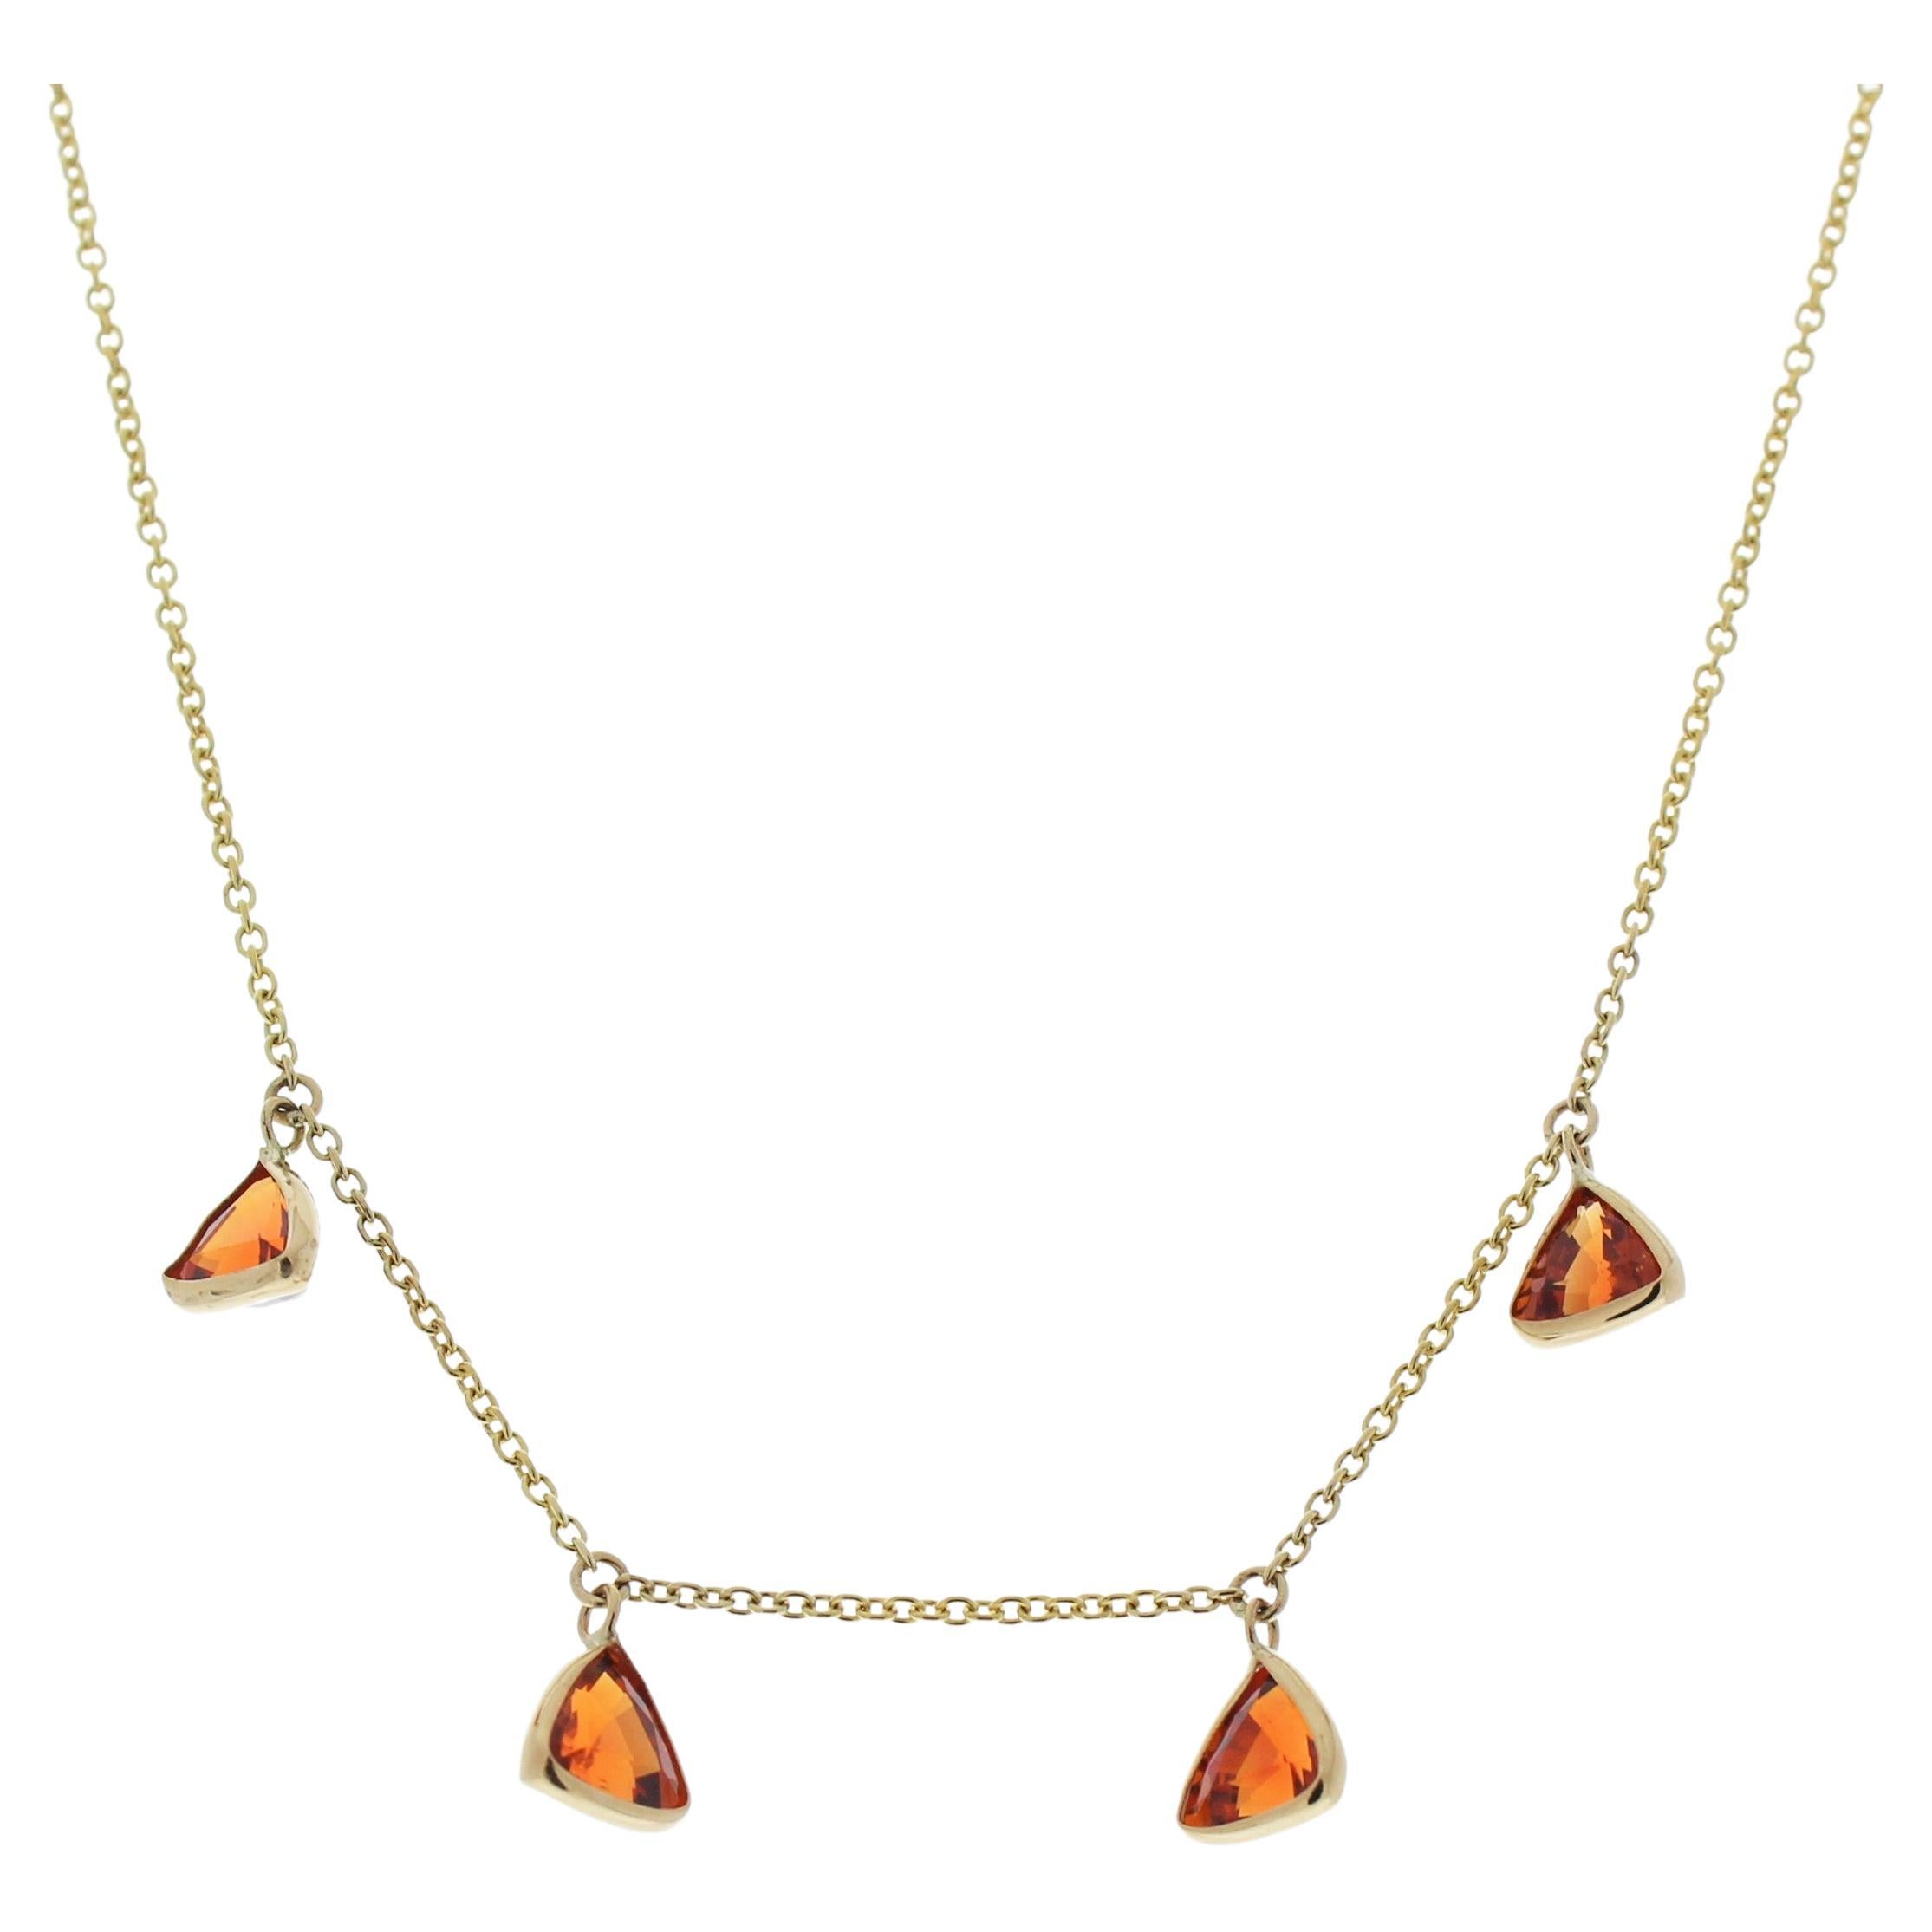 3.55 Carat Spessartite Gemstone Orangy Red Handmade Solitaire Necklace In 14k YG For Sale